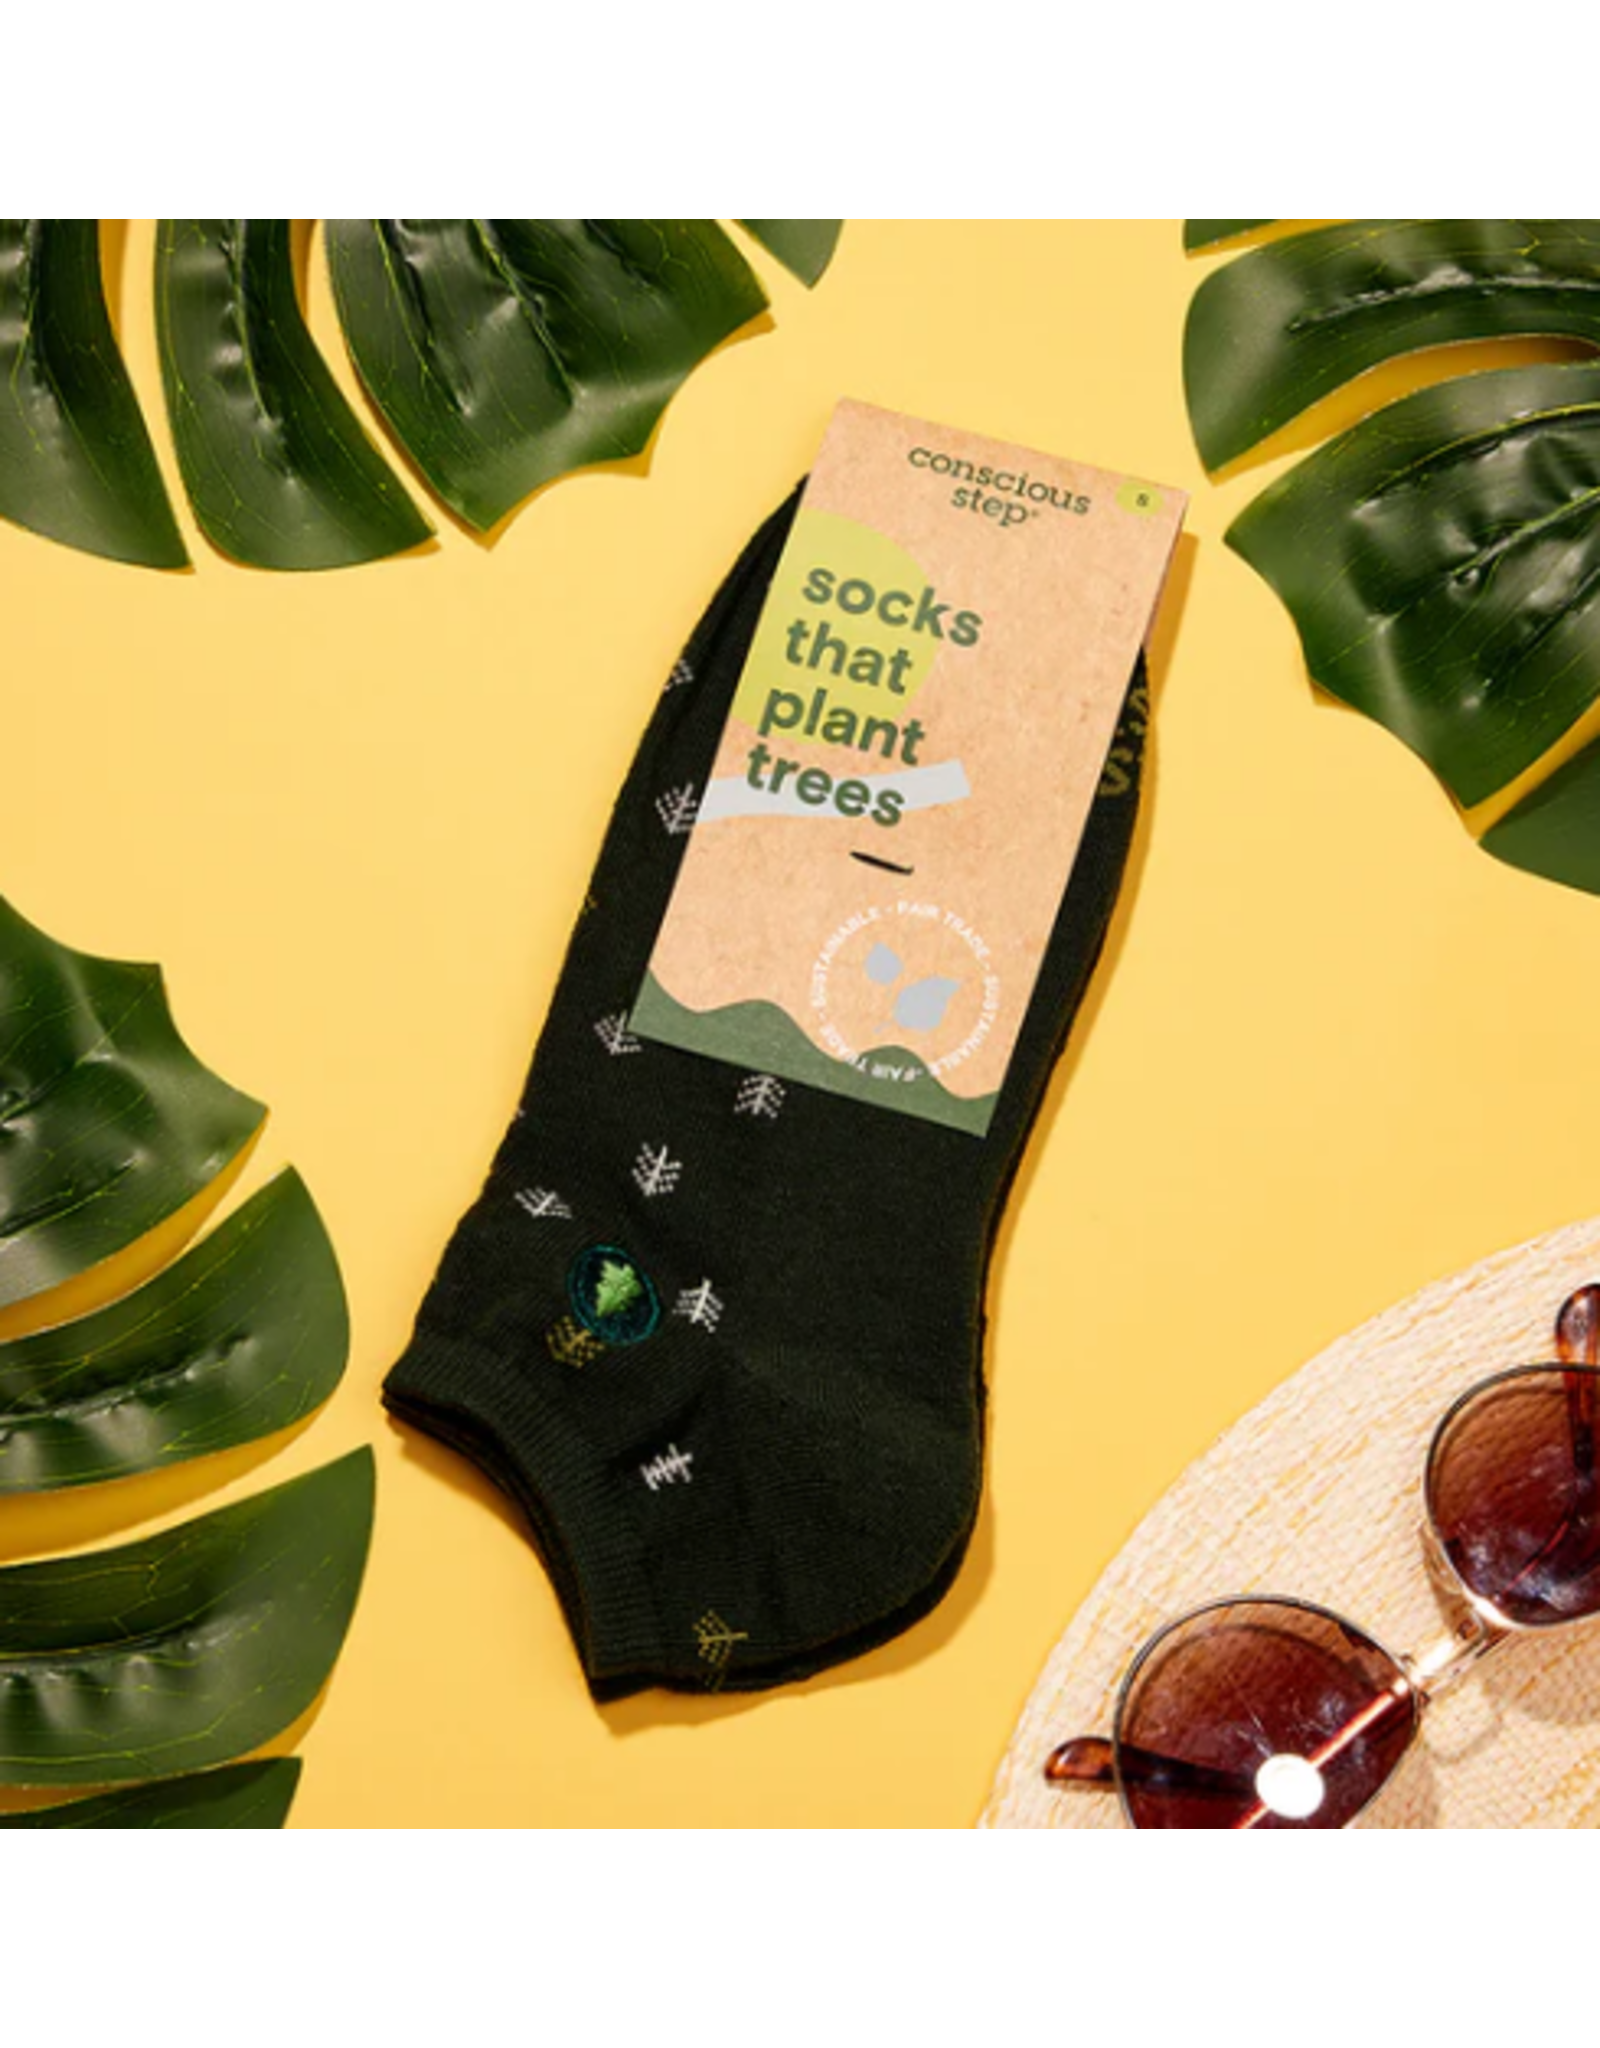 India Ankle Socks That Plant Trees - Dark Green